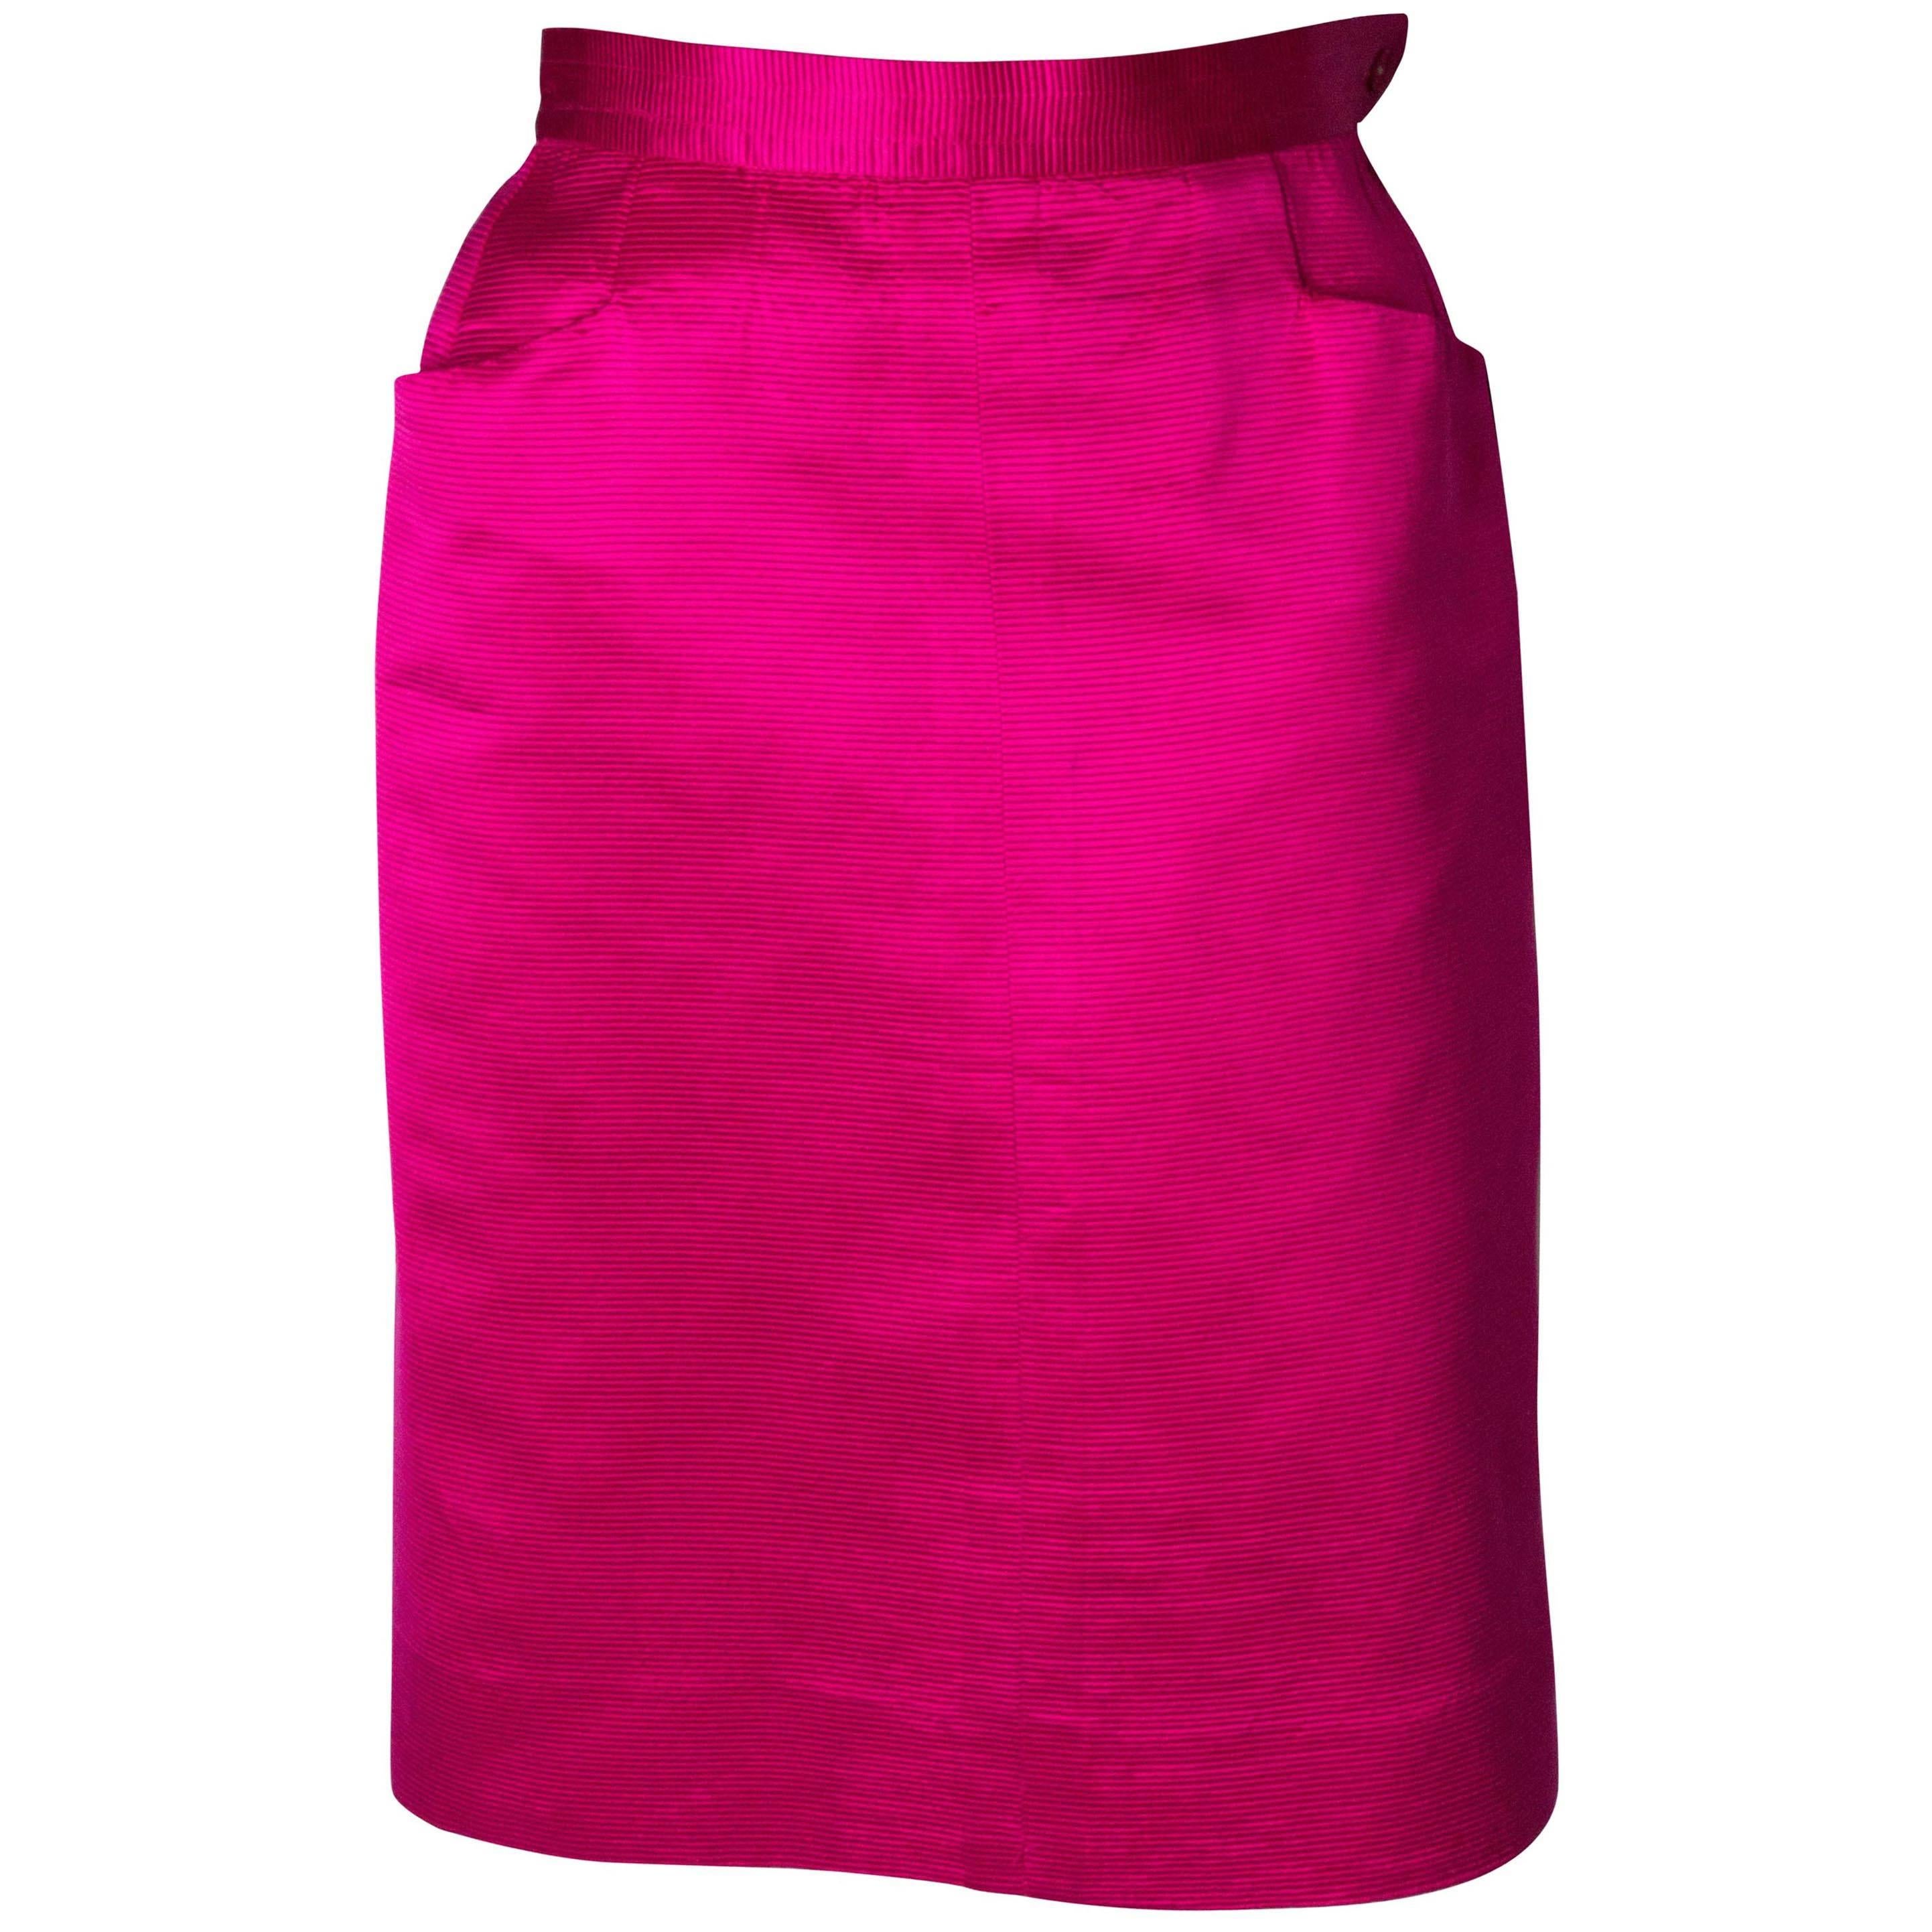 Yves Saint Laurent Vintage Pink Skirt